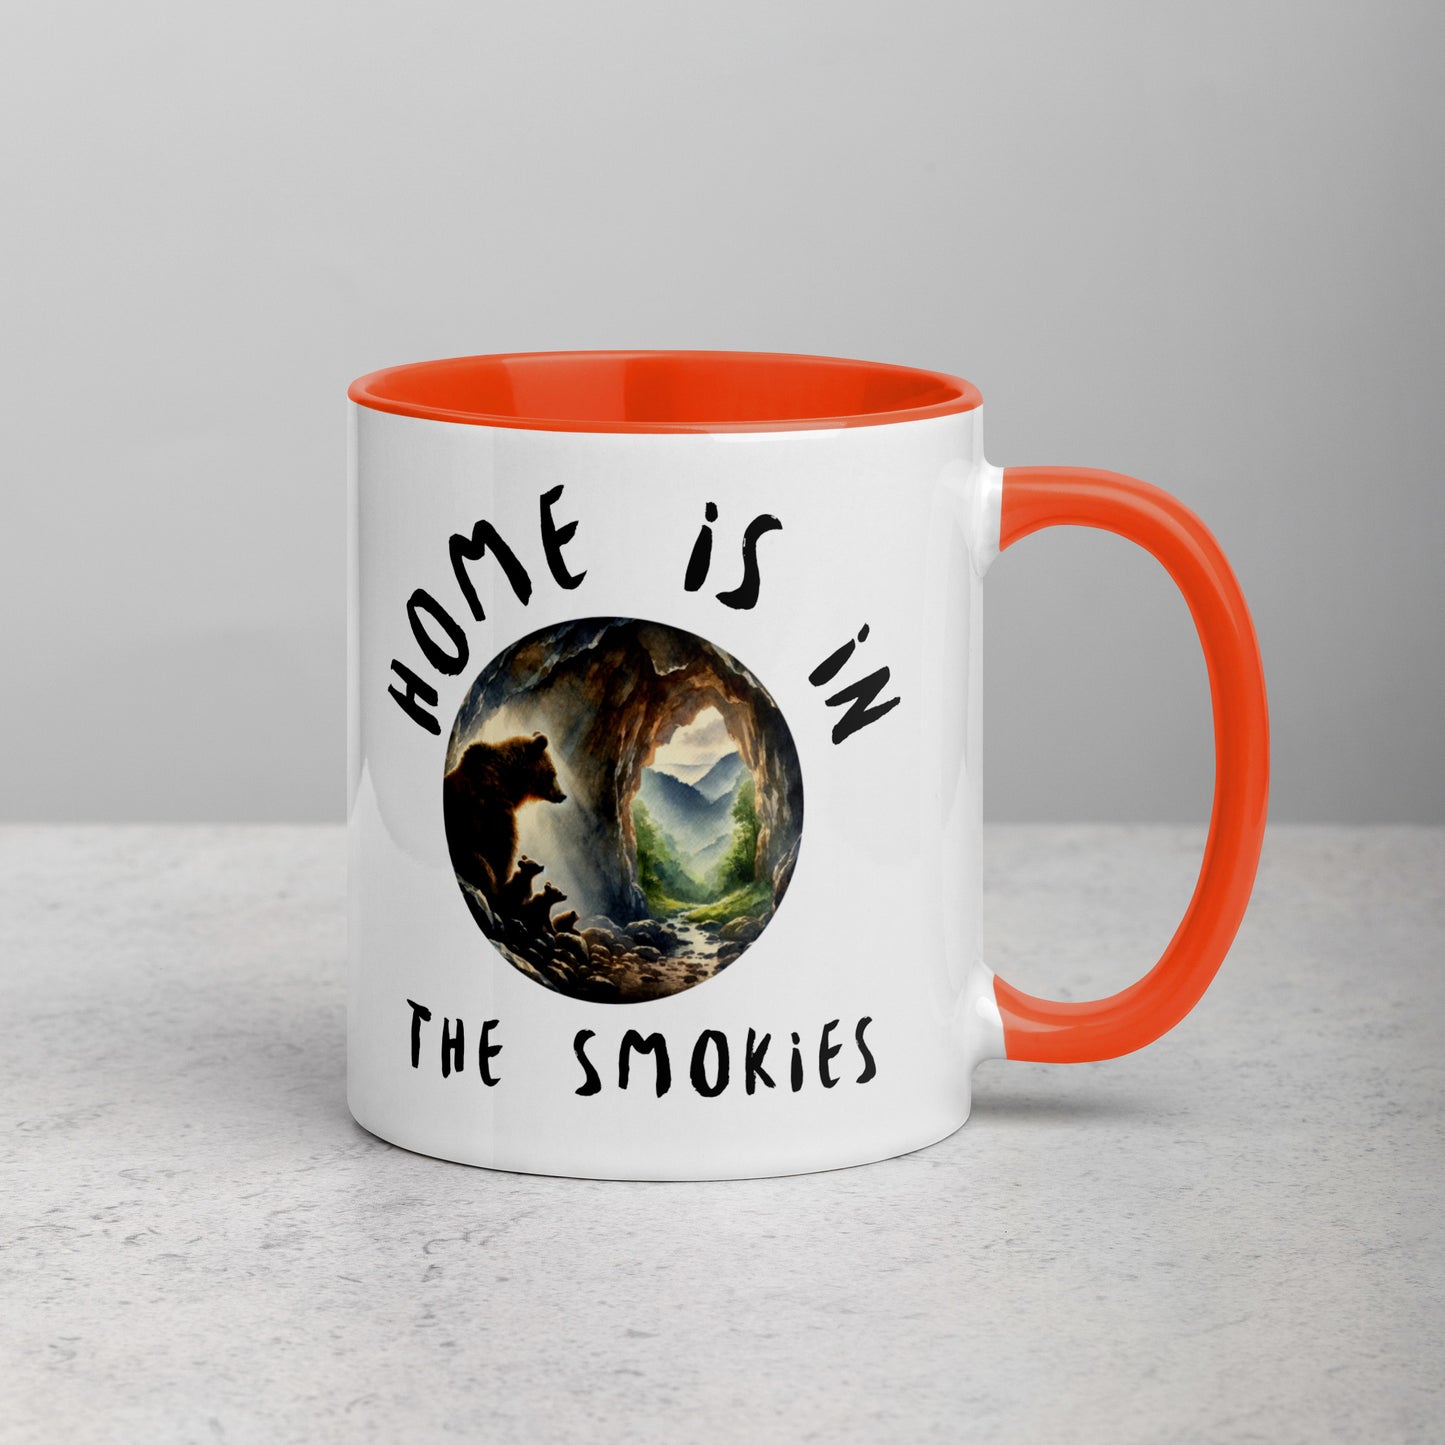 "Home is in the smokies" mug